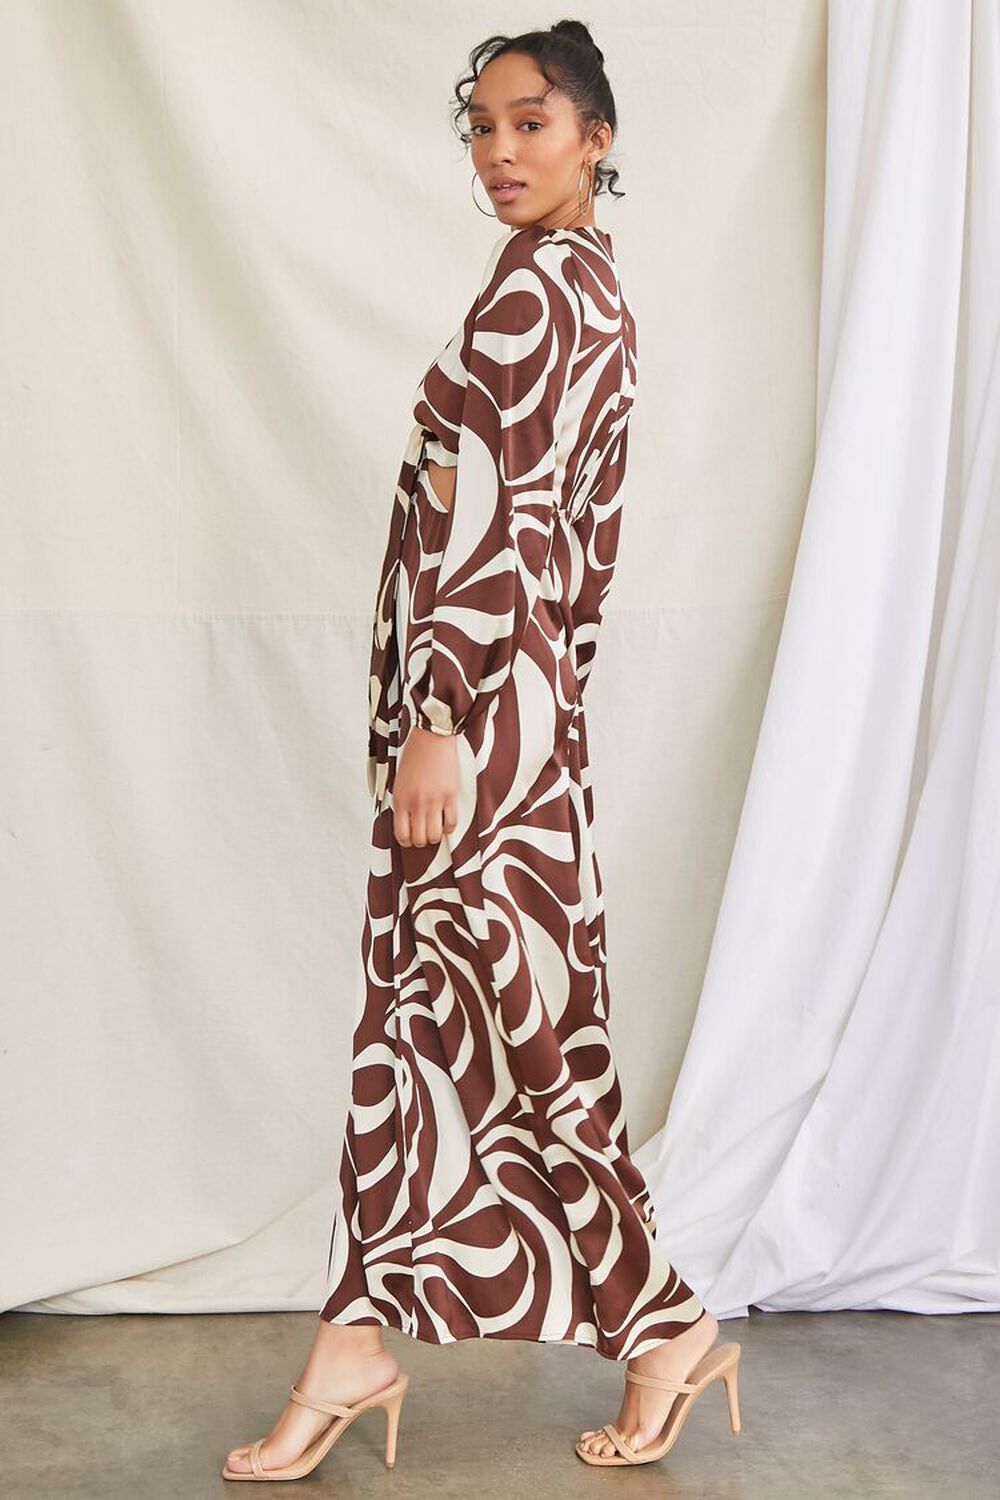 BROWN/MULTI Satin Abstract Print Maxi Dress, image 2